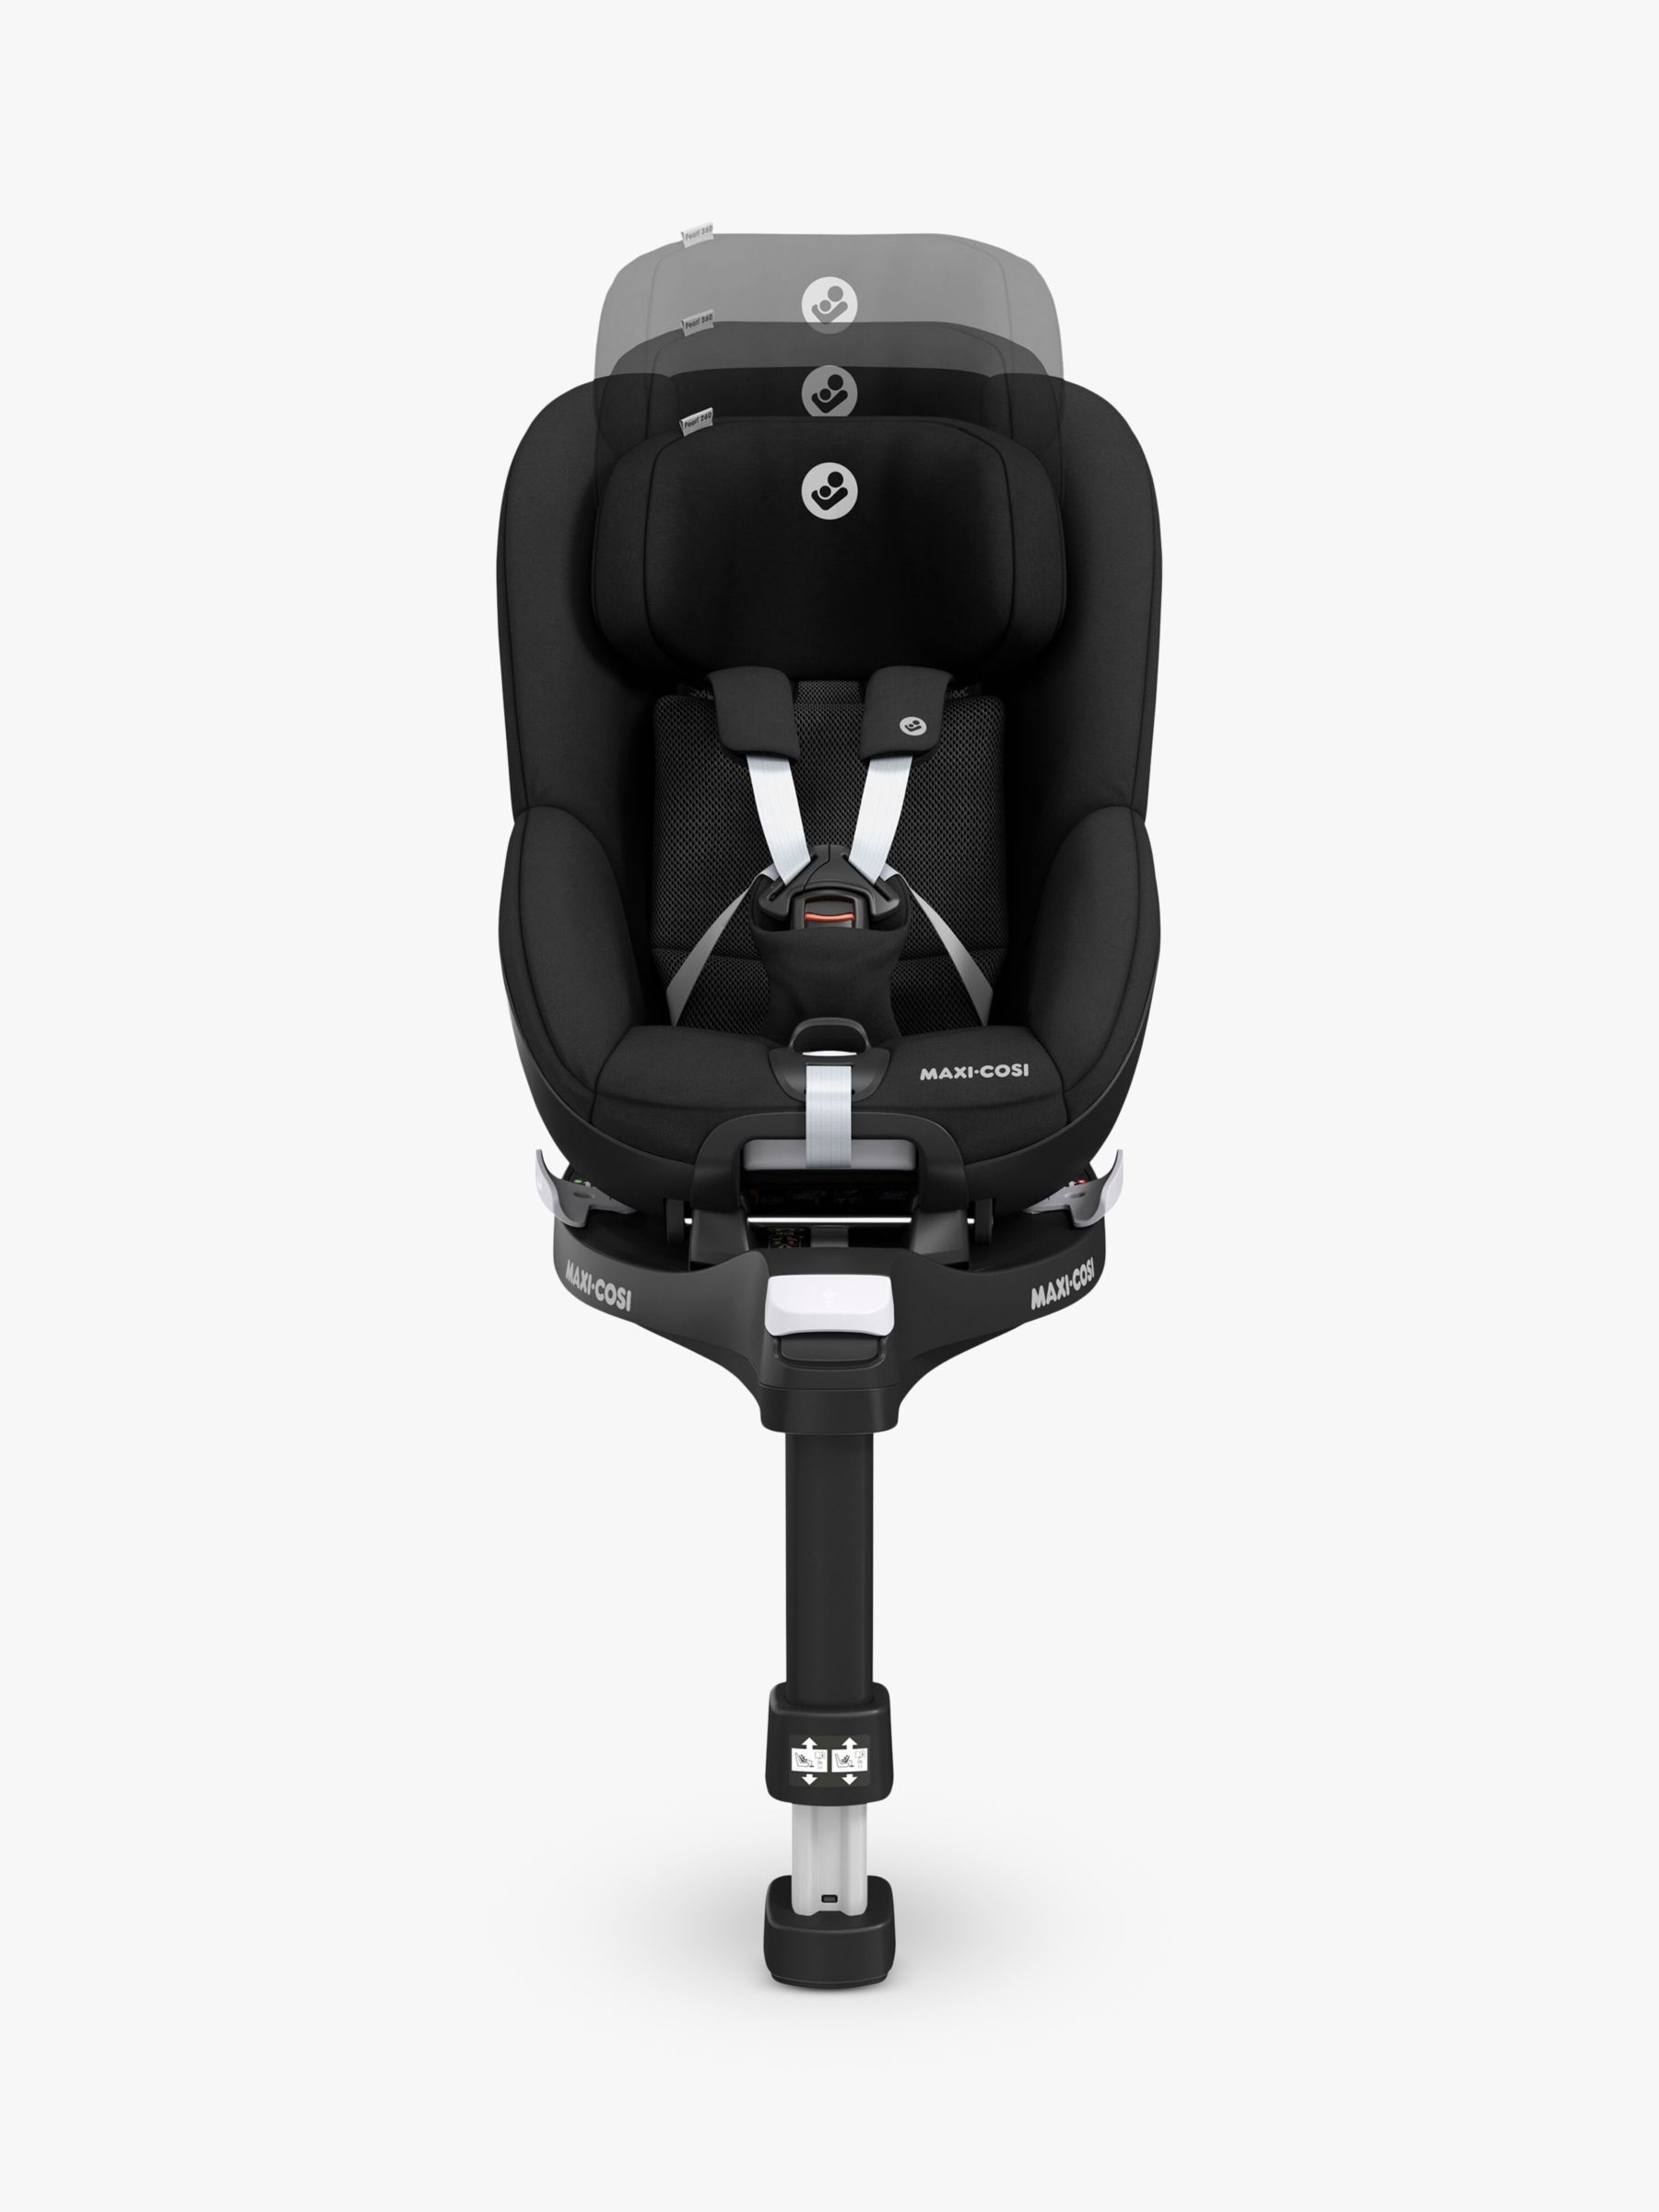 Maxi Cosi Pearl Smart i-size Authentic Black Car Seat RRP£200